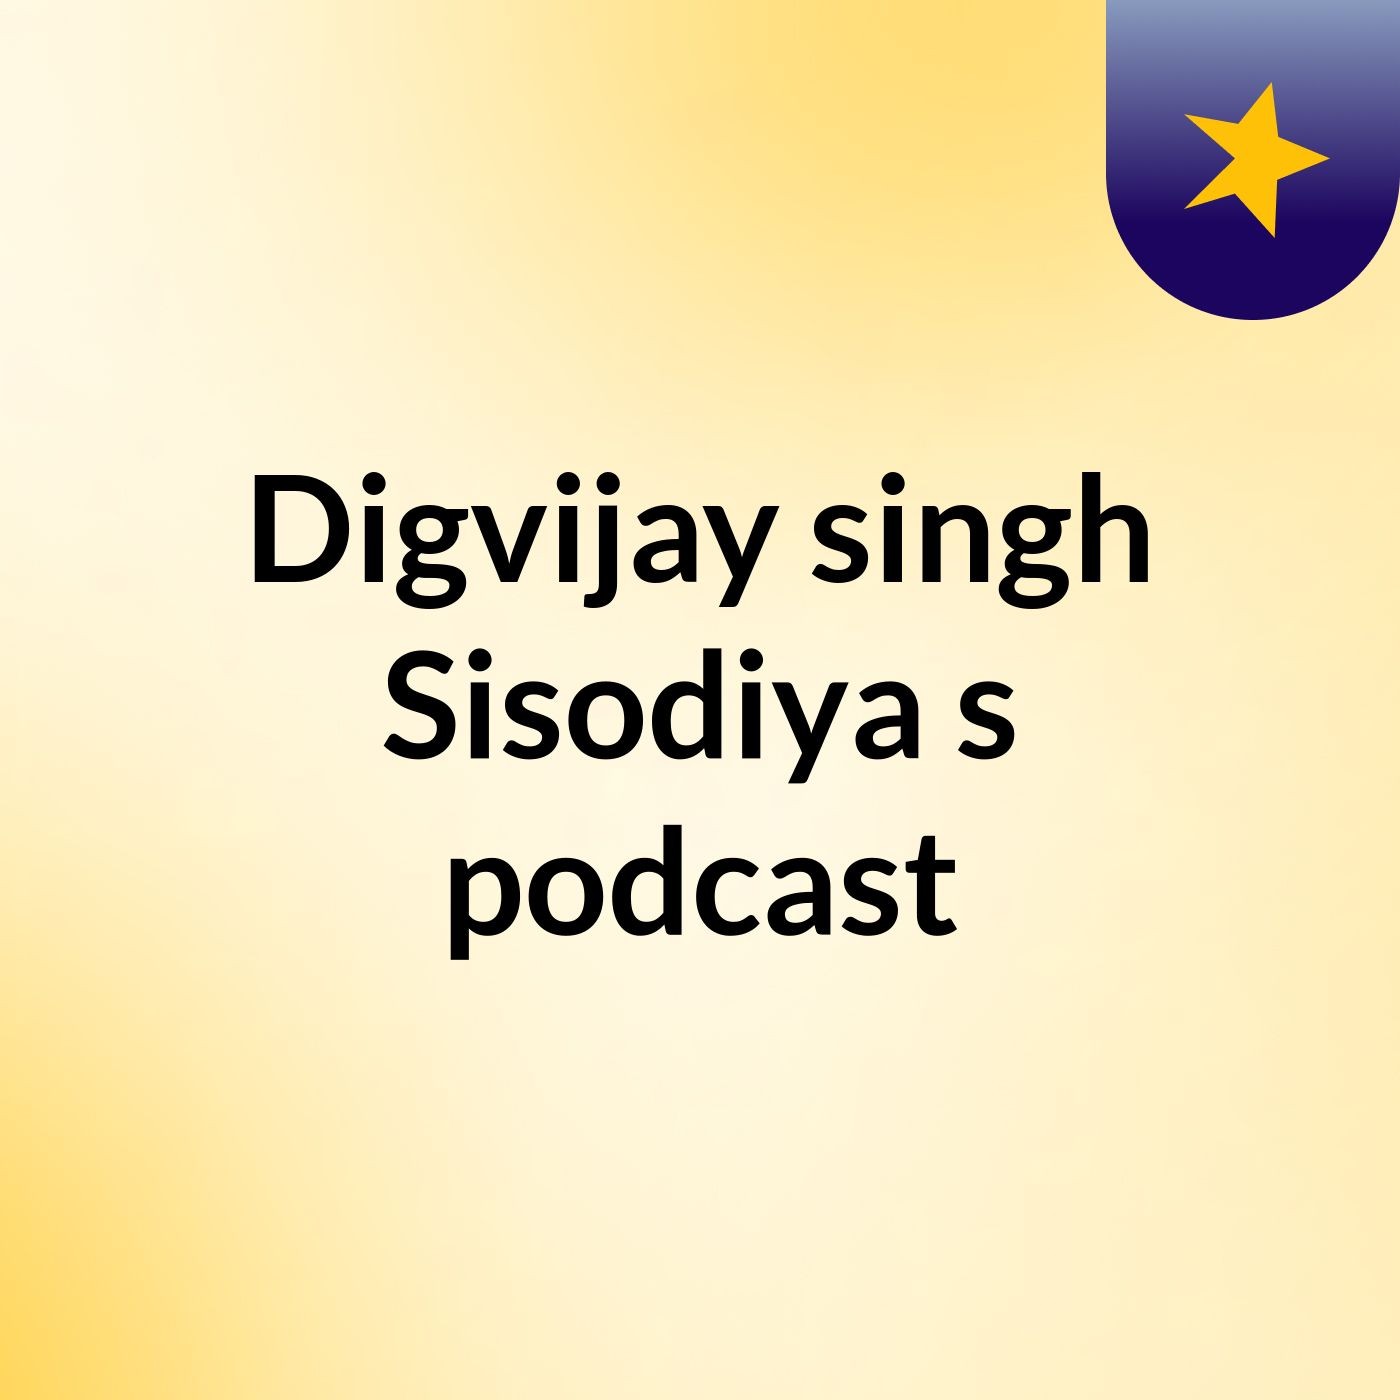 Episode 15 - Digvijay singh Sisodiya's podcast